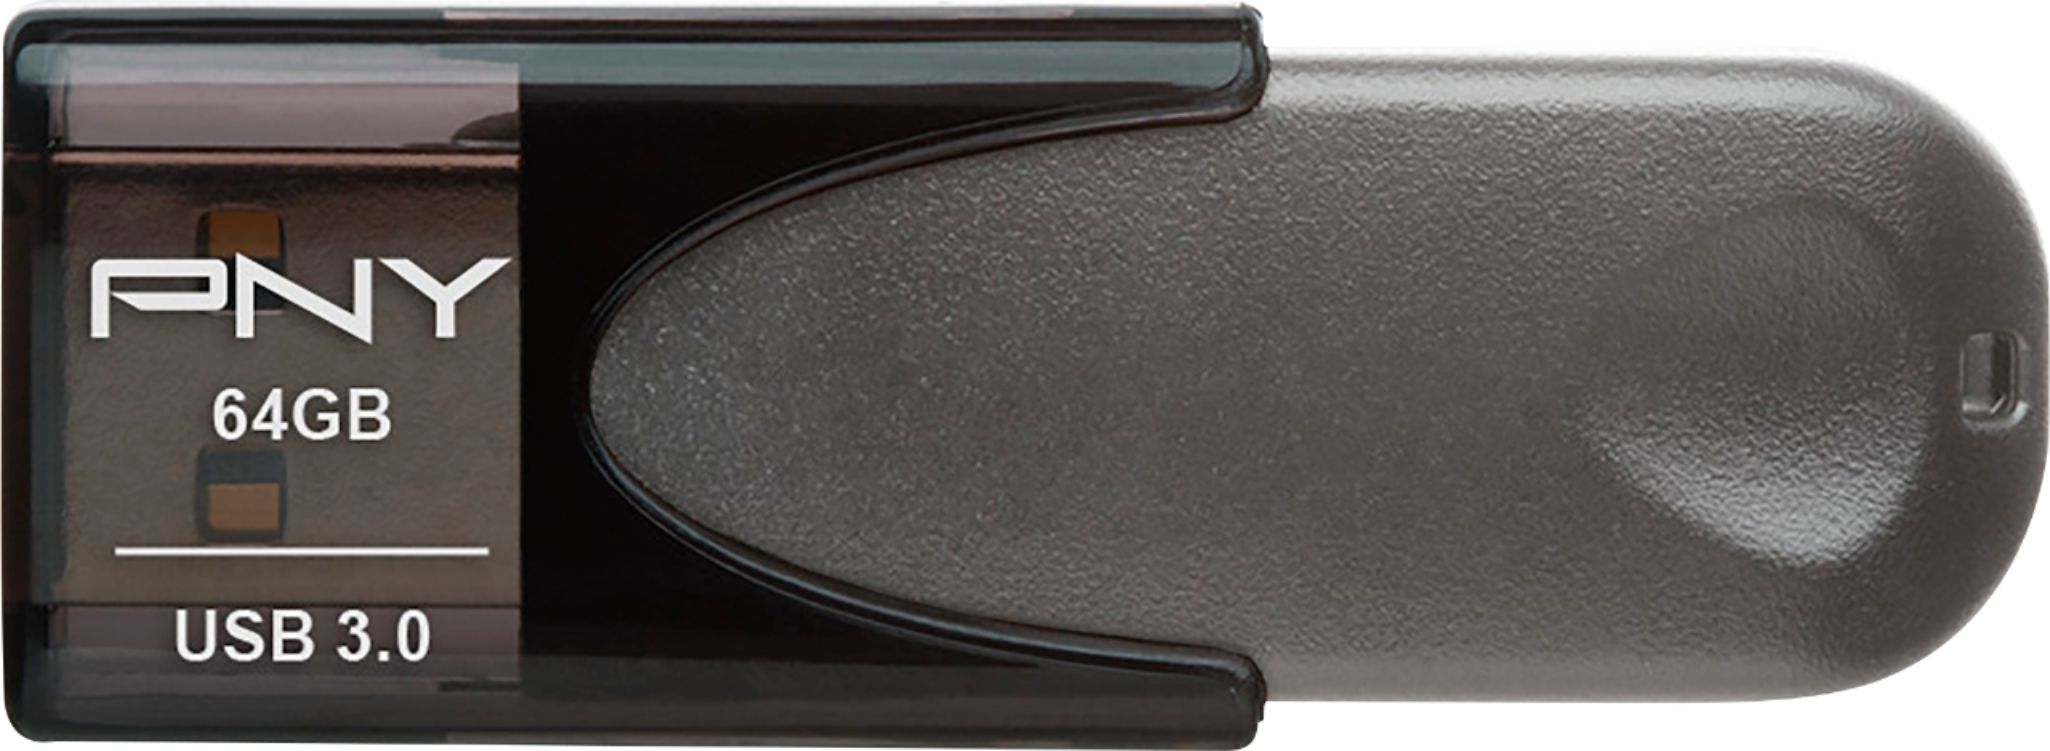 PNY - Elite Turbo Attache 4 64GB USB 3.0 Type A Flash Drive - Black/Gray was $19.99 now $8.99 (55.0% off)